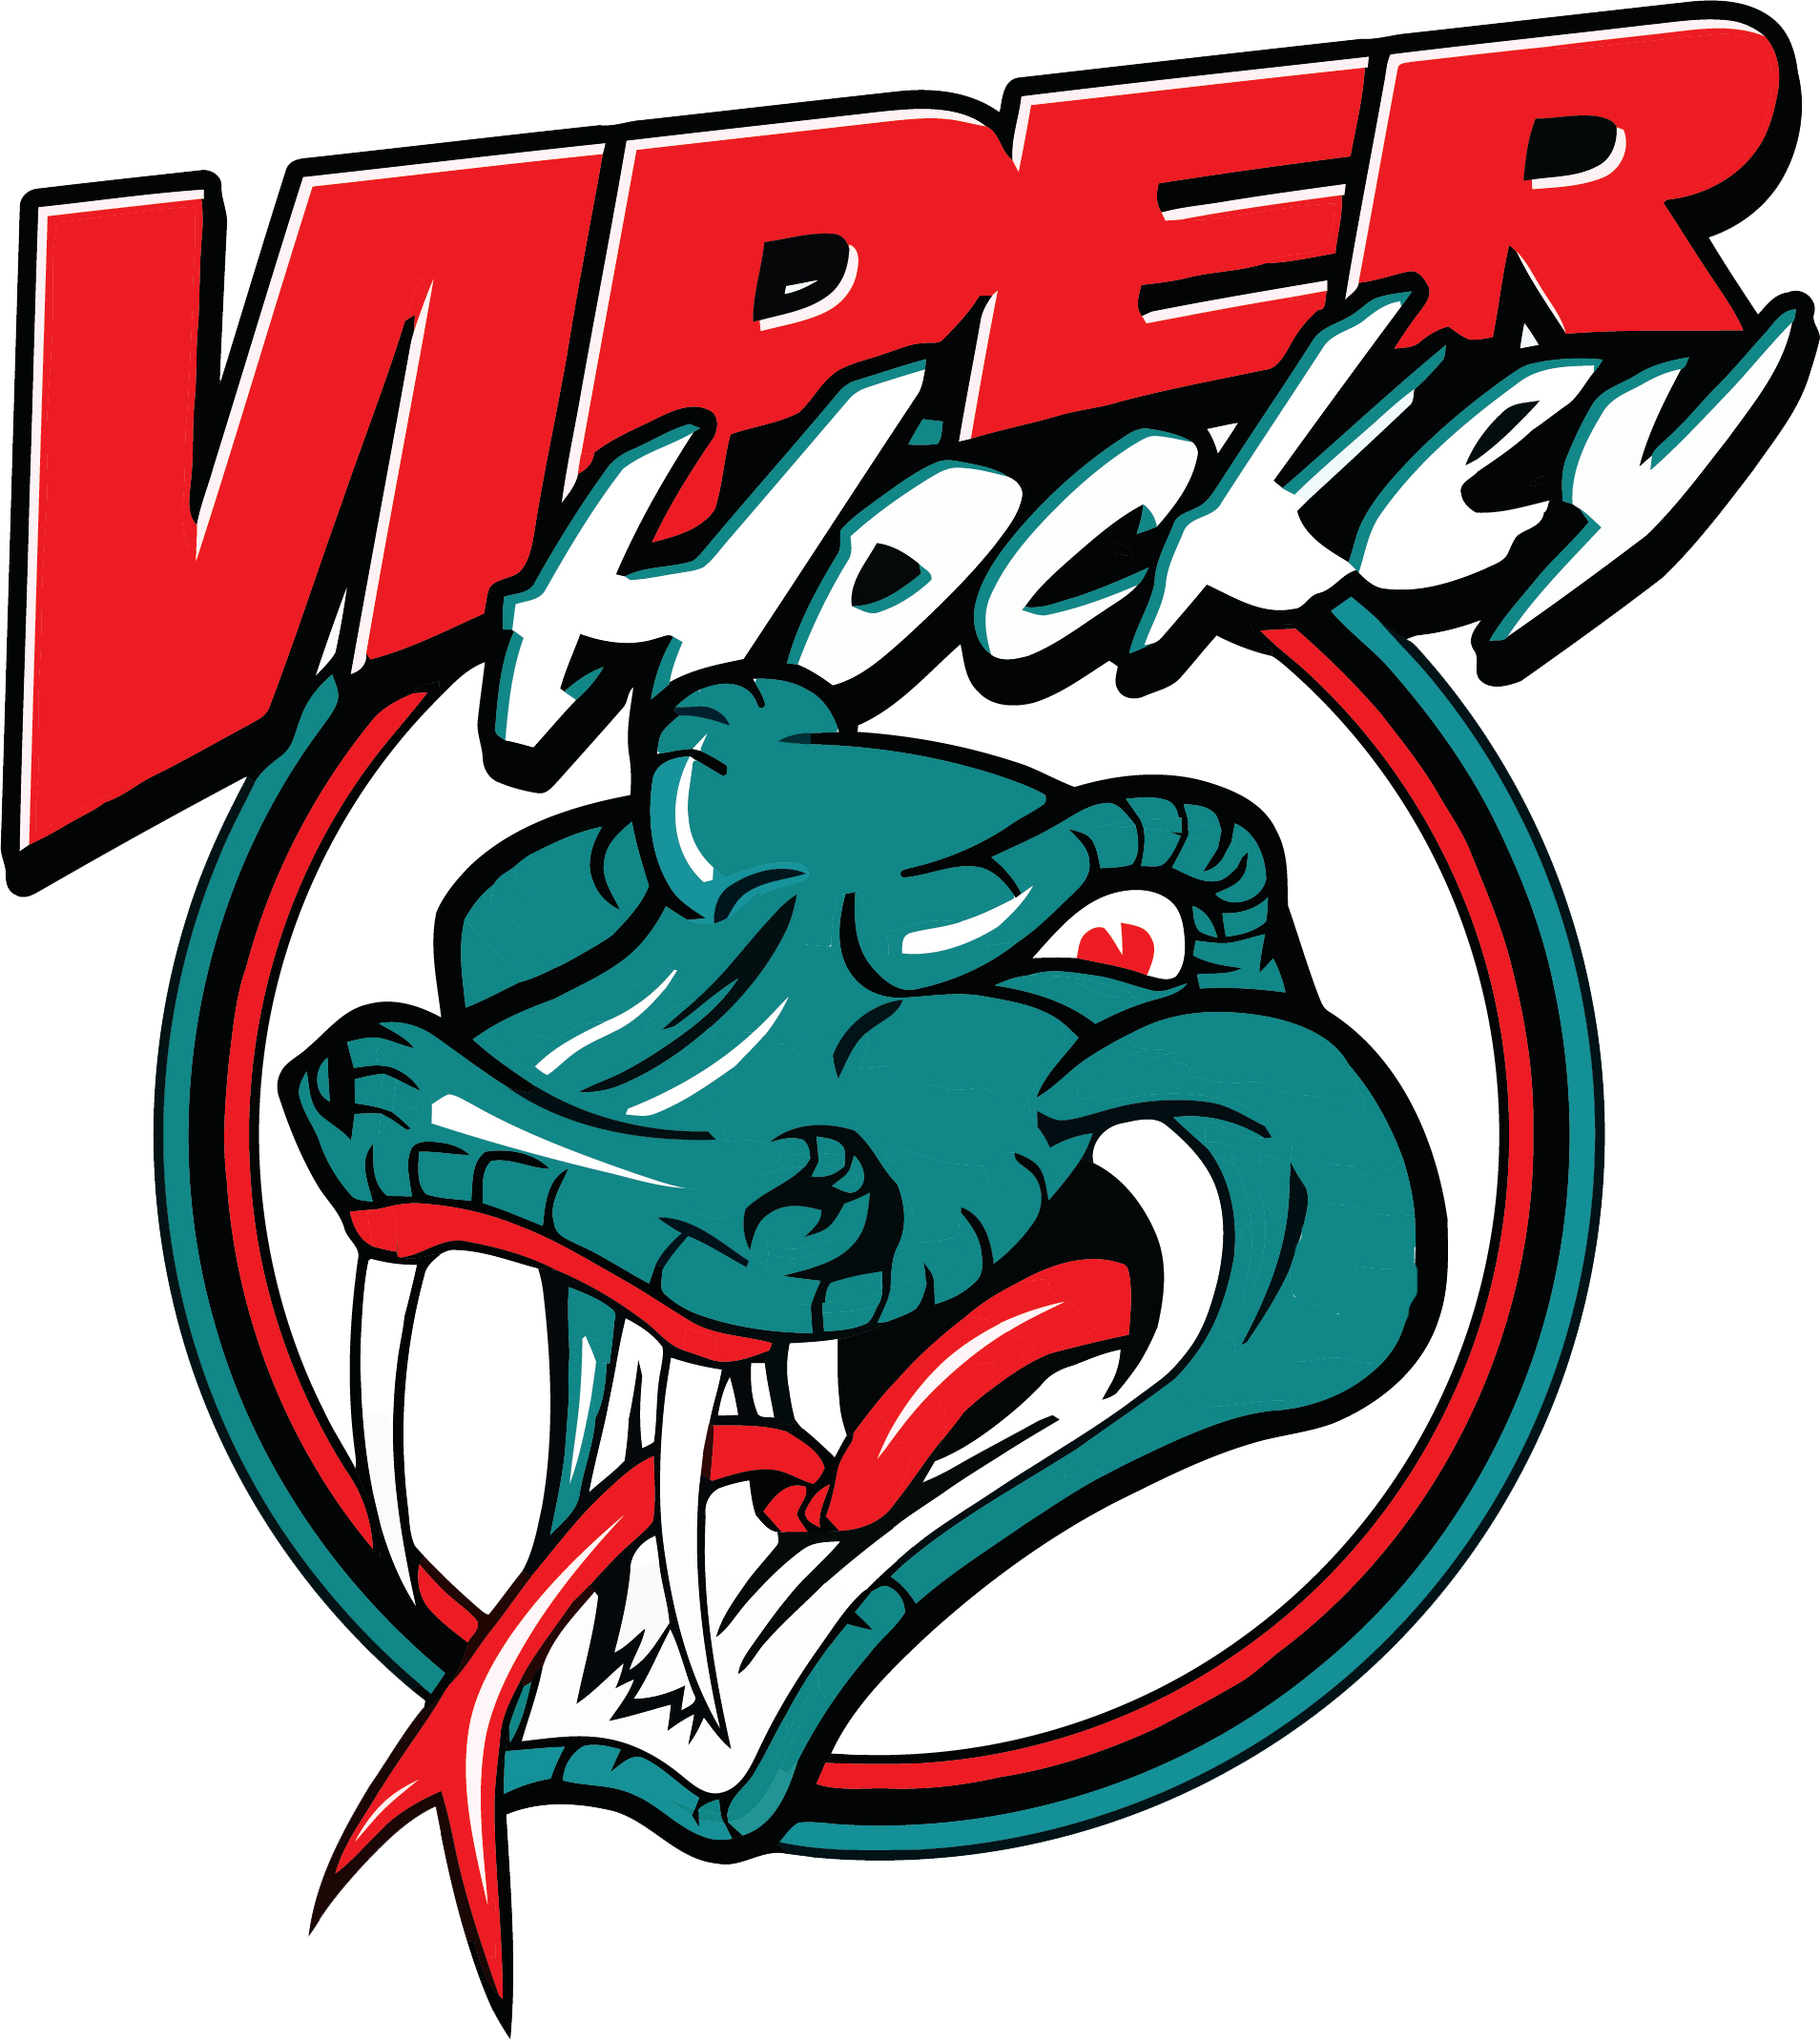 Capital City Vipers logo